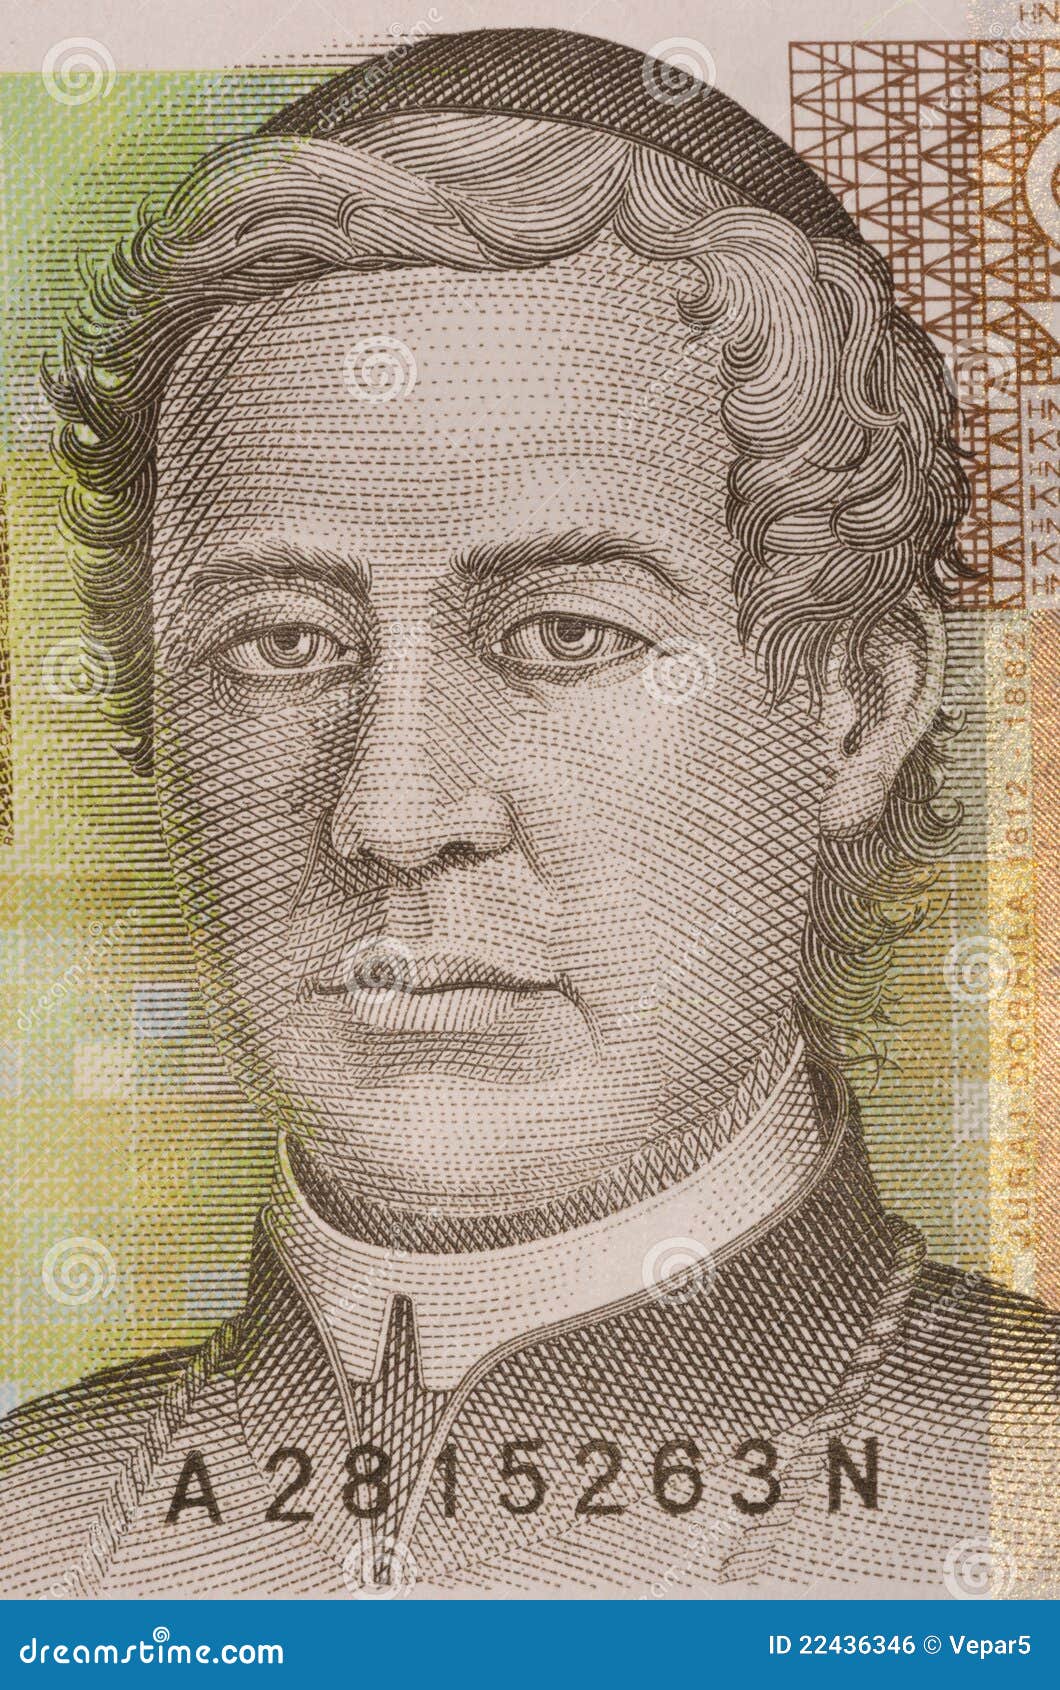 portrait of 10 kuna croatian banknote